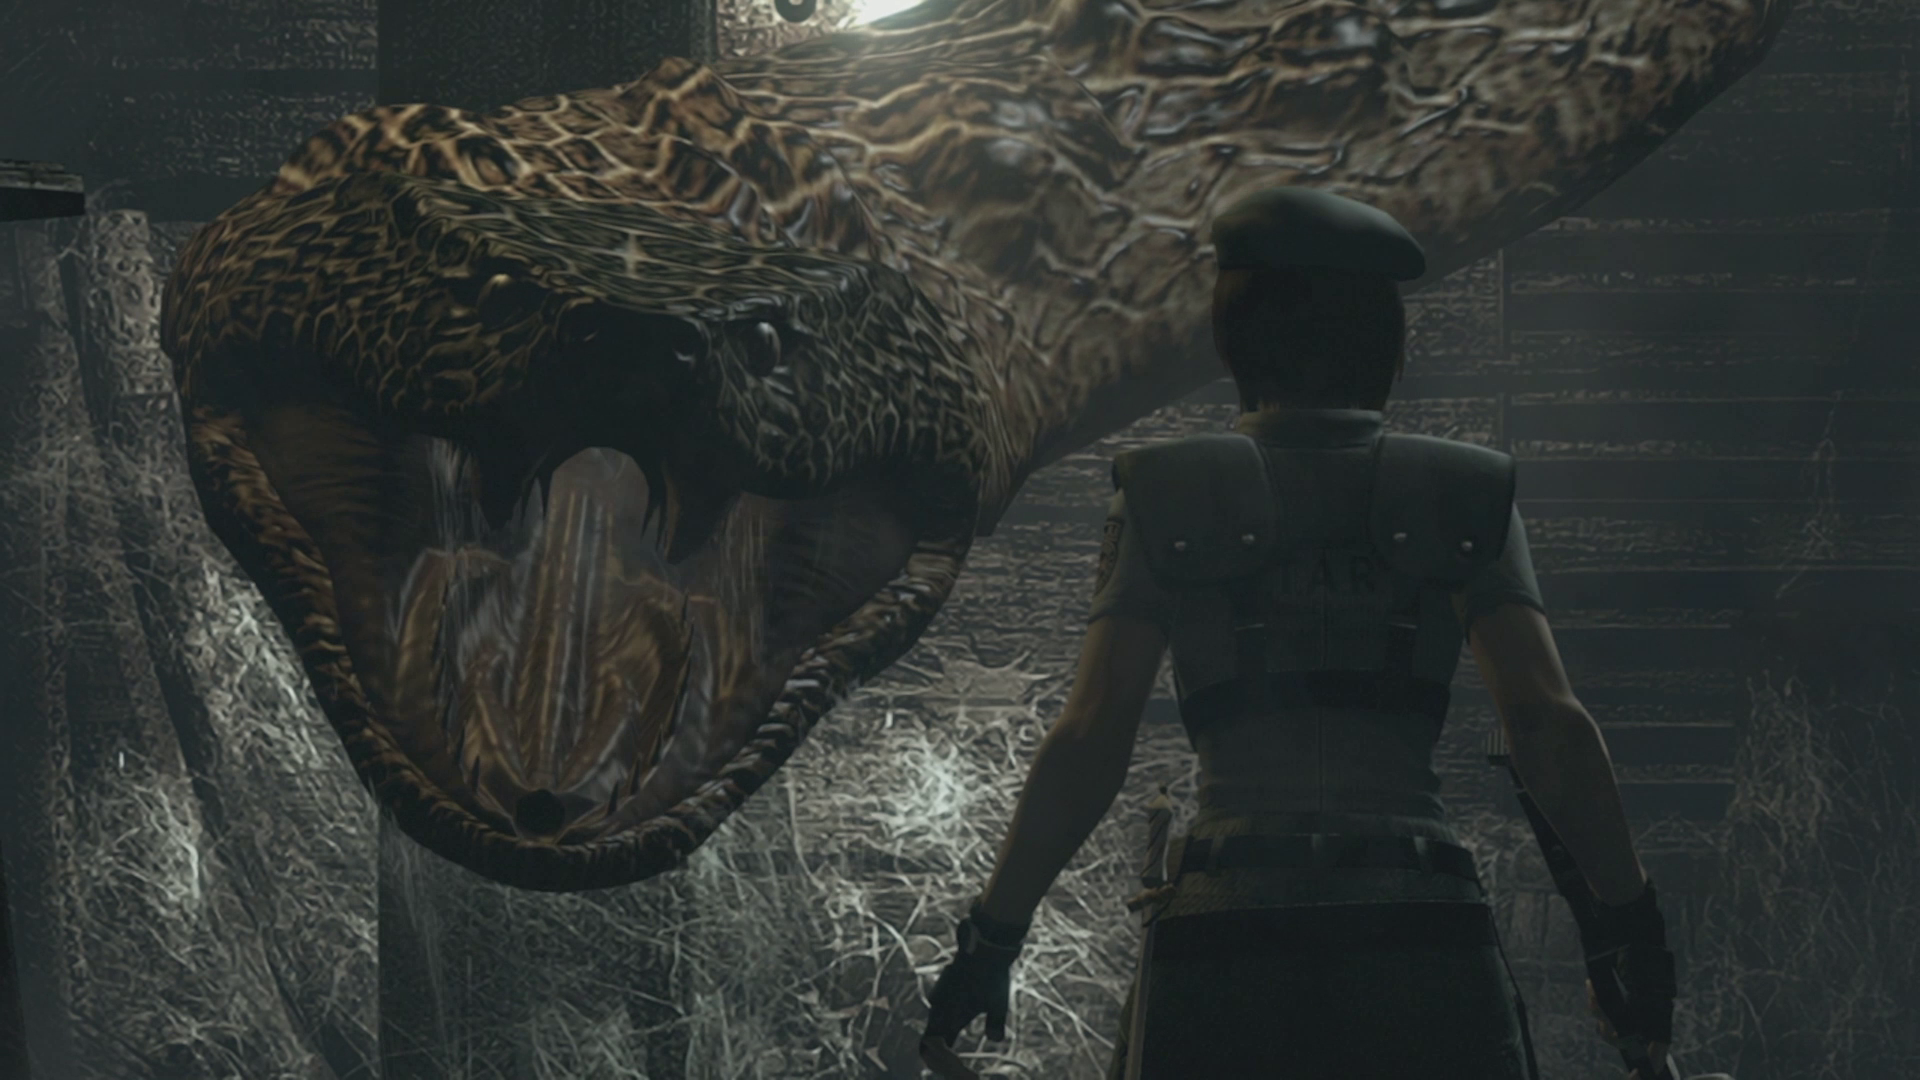 Resident Evil HD Remaster (PS4) - Chris Walkthrough Part 1 - Enter